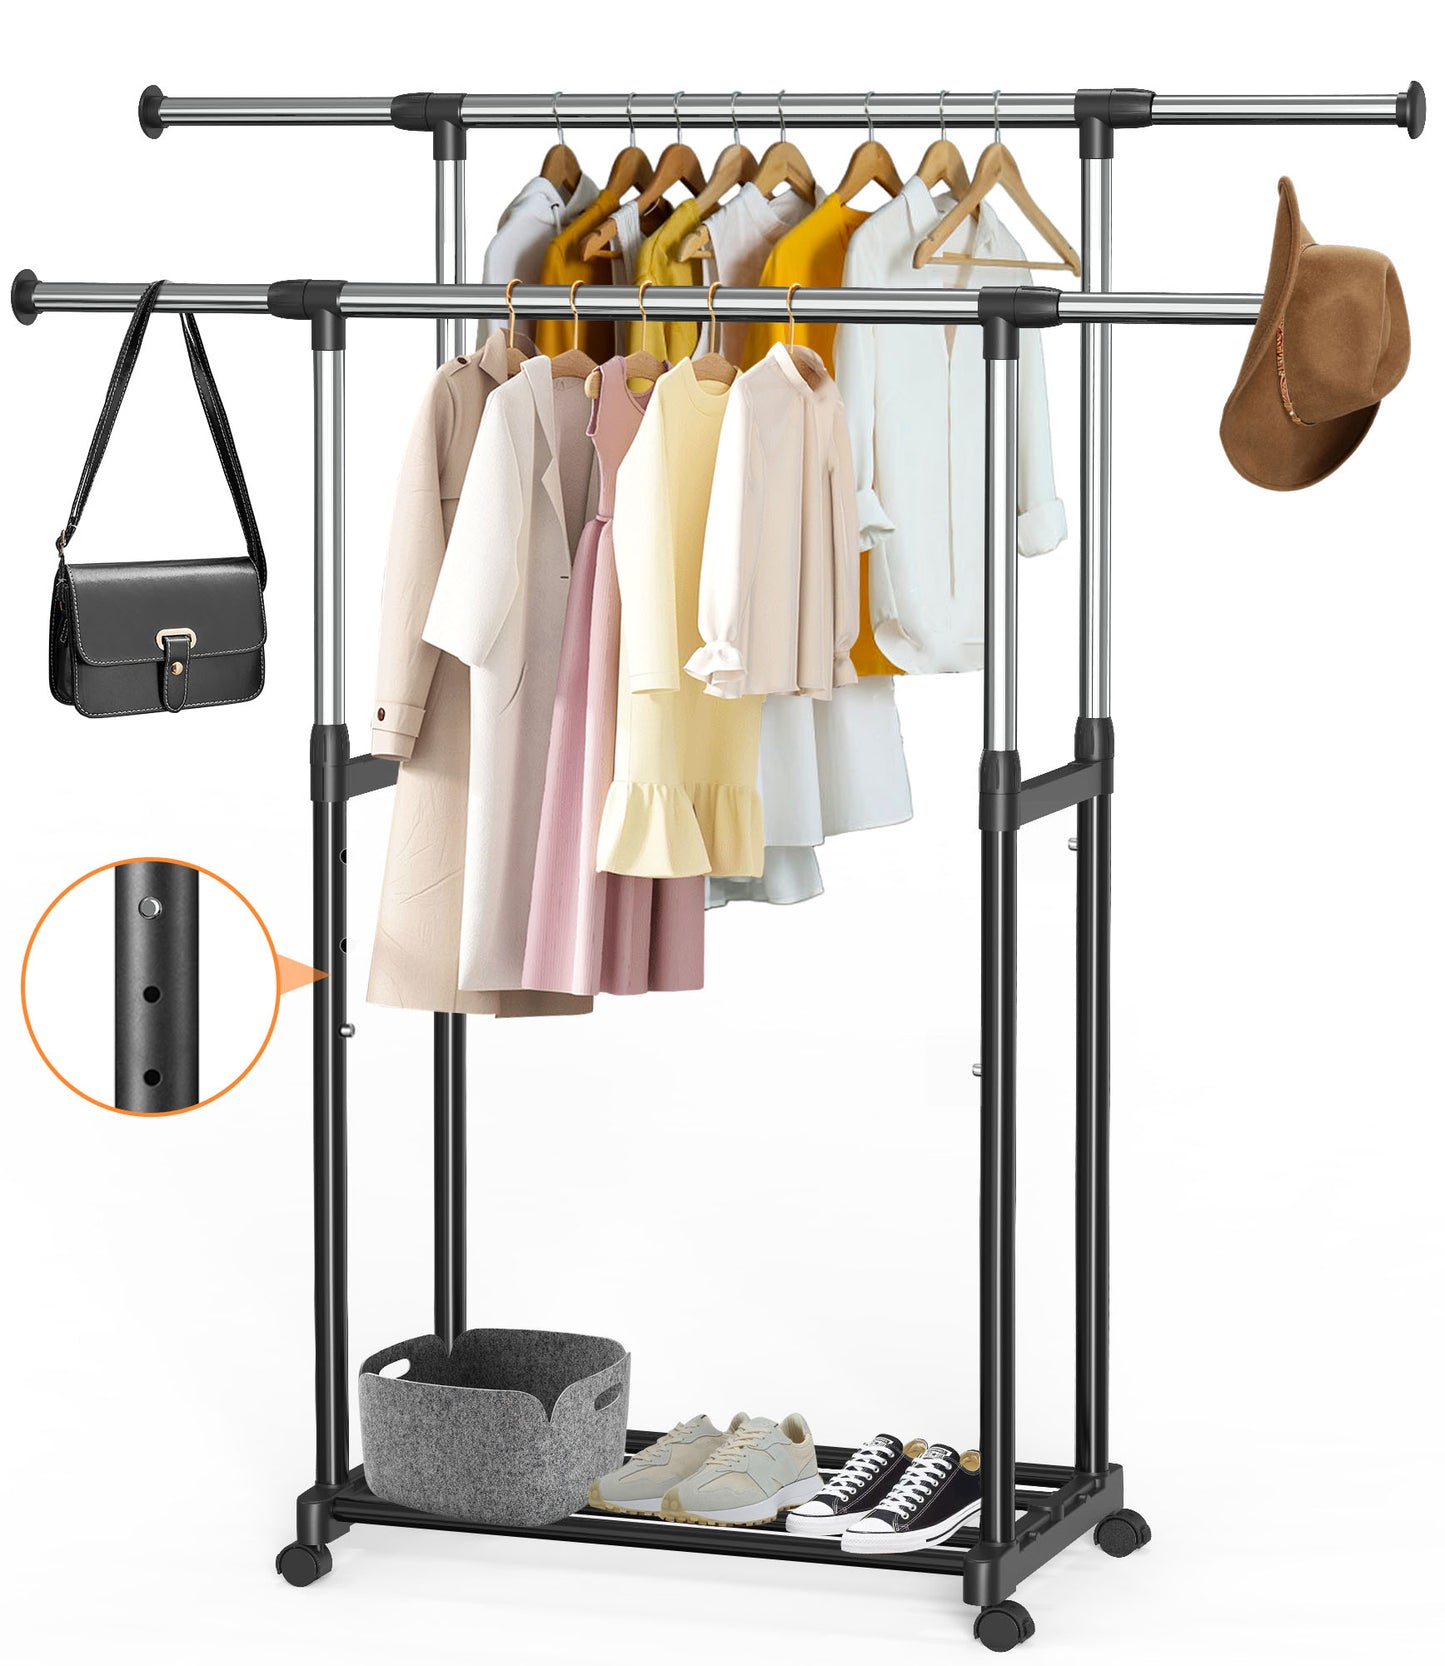 Nefoso Double Rails Clothing Garment Rack,Portable Adjustable Clothes ...